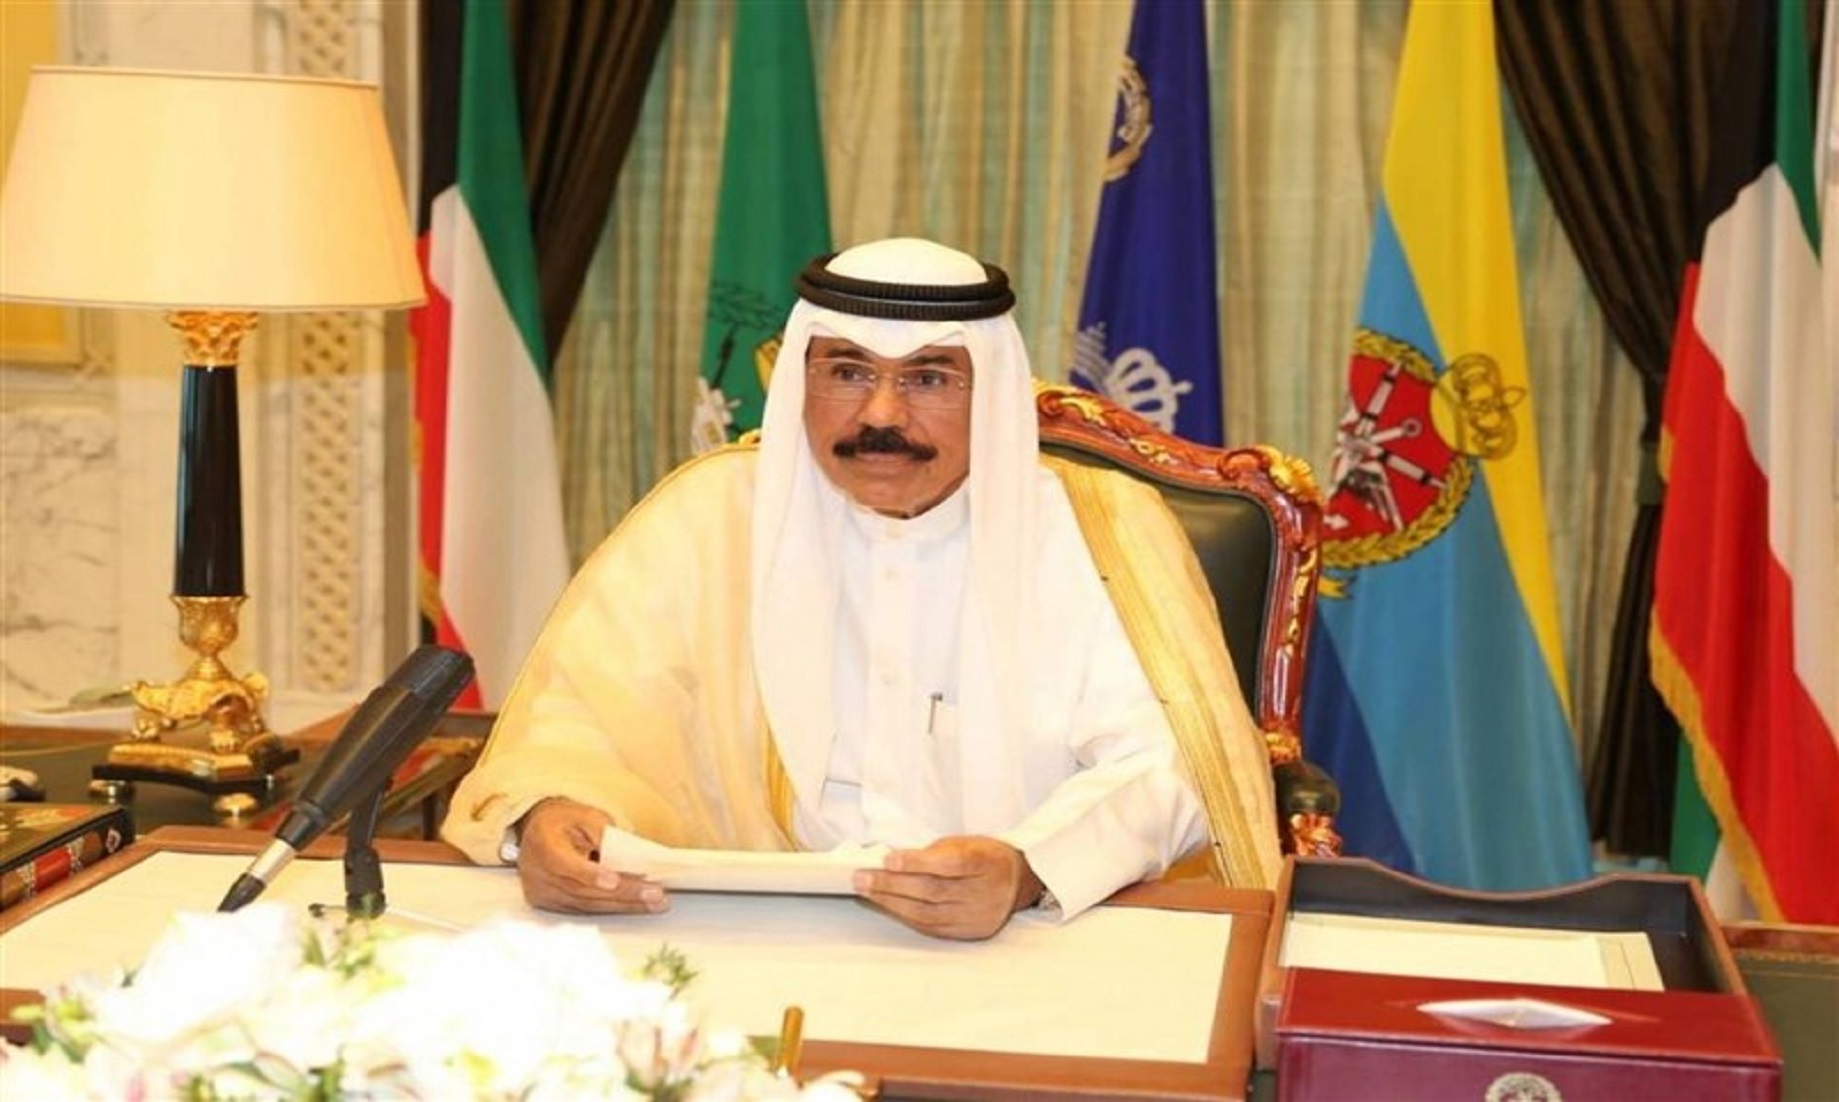 Sheikh Nawaf Al-Ahmad Al-Jaber Al-Sabah Takes Oath As Kuwait’s New Emir